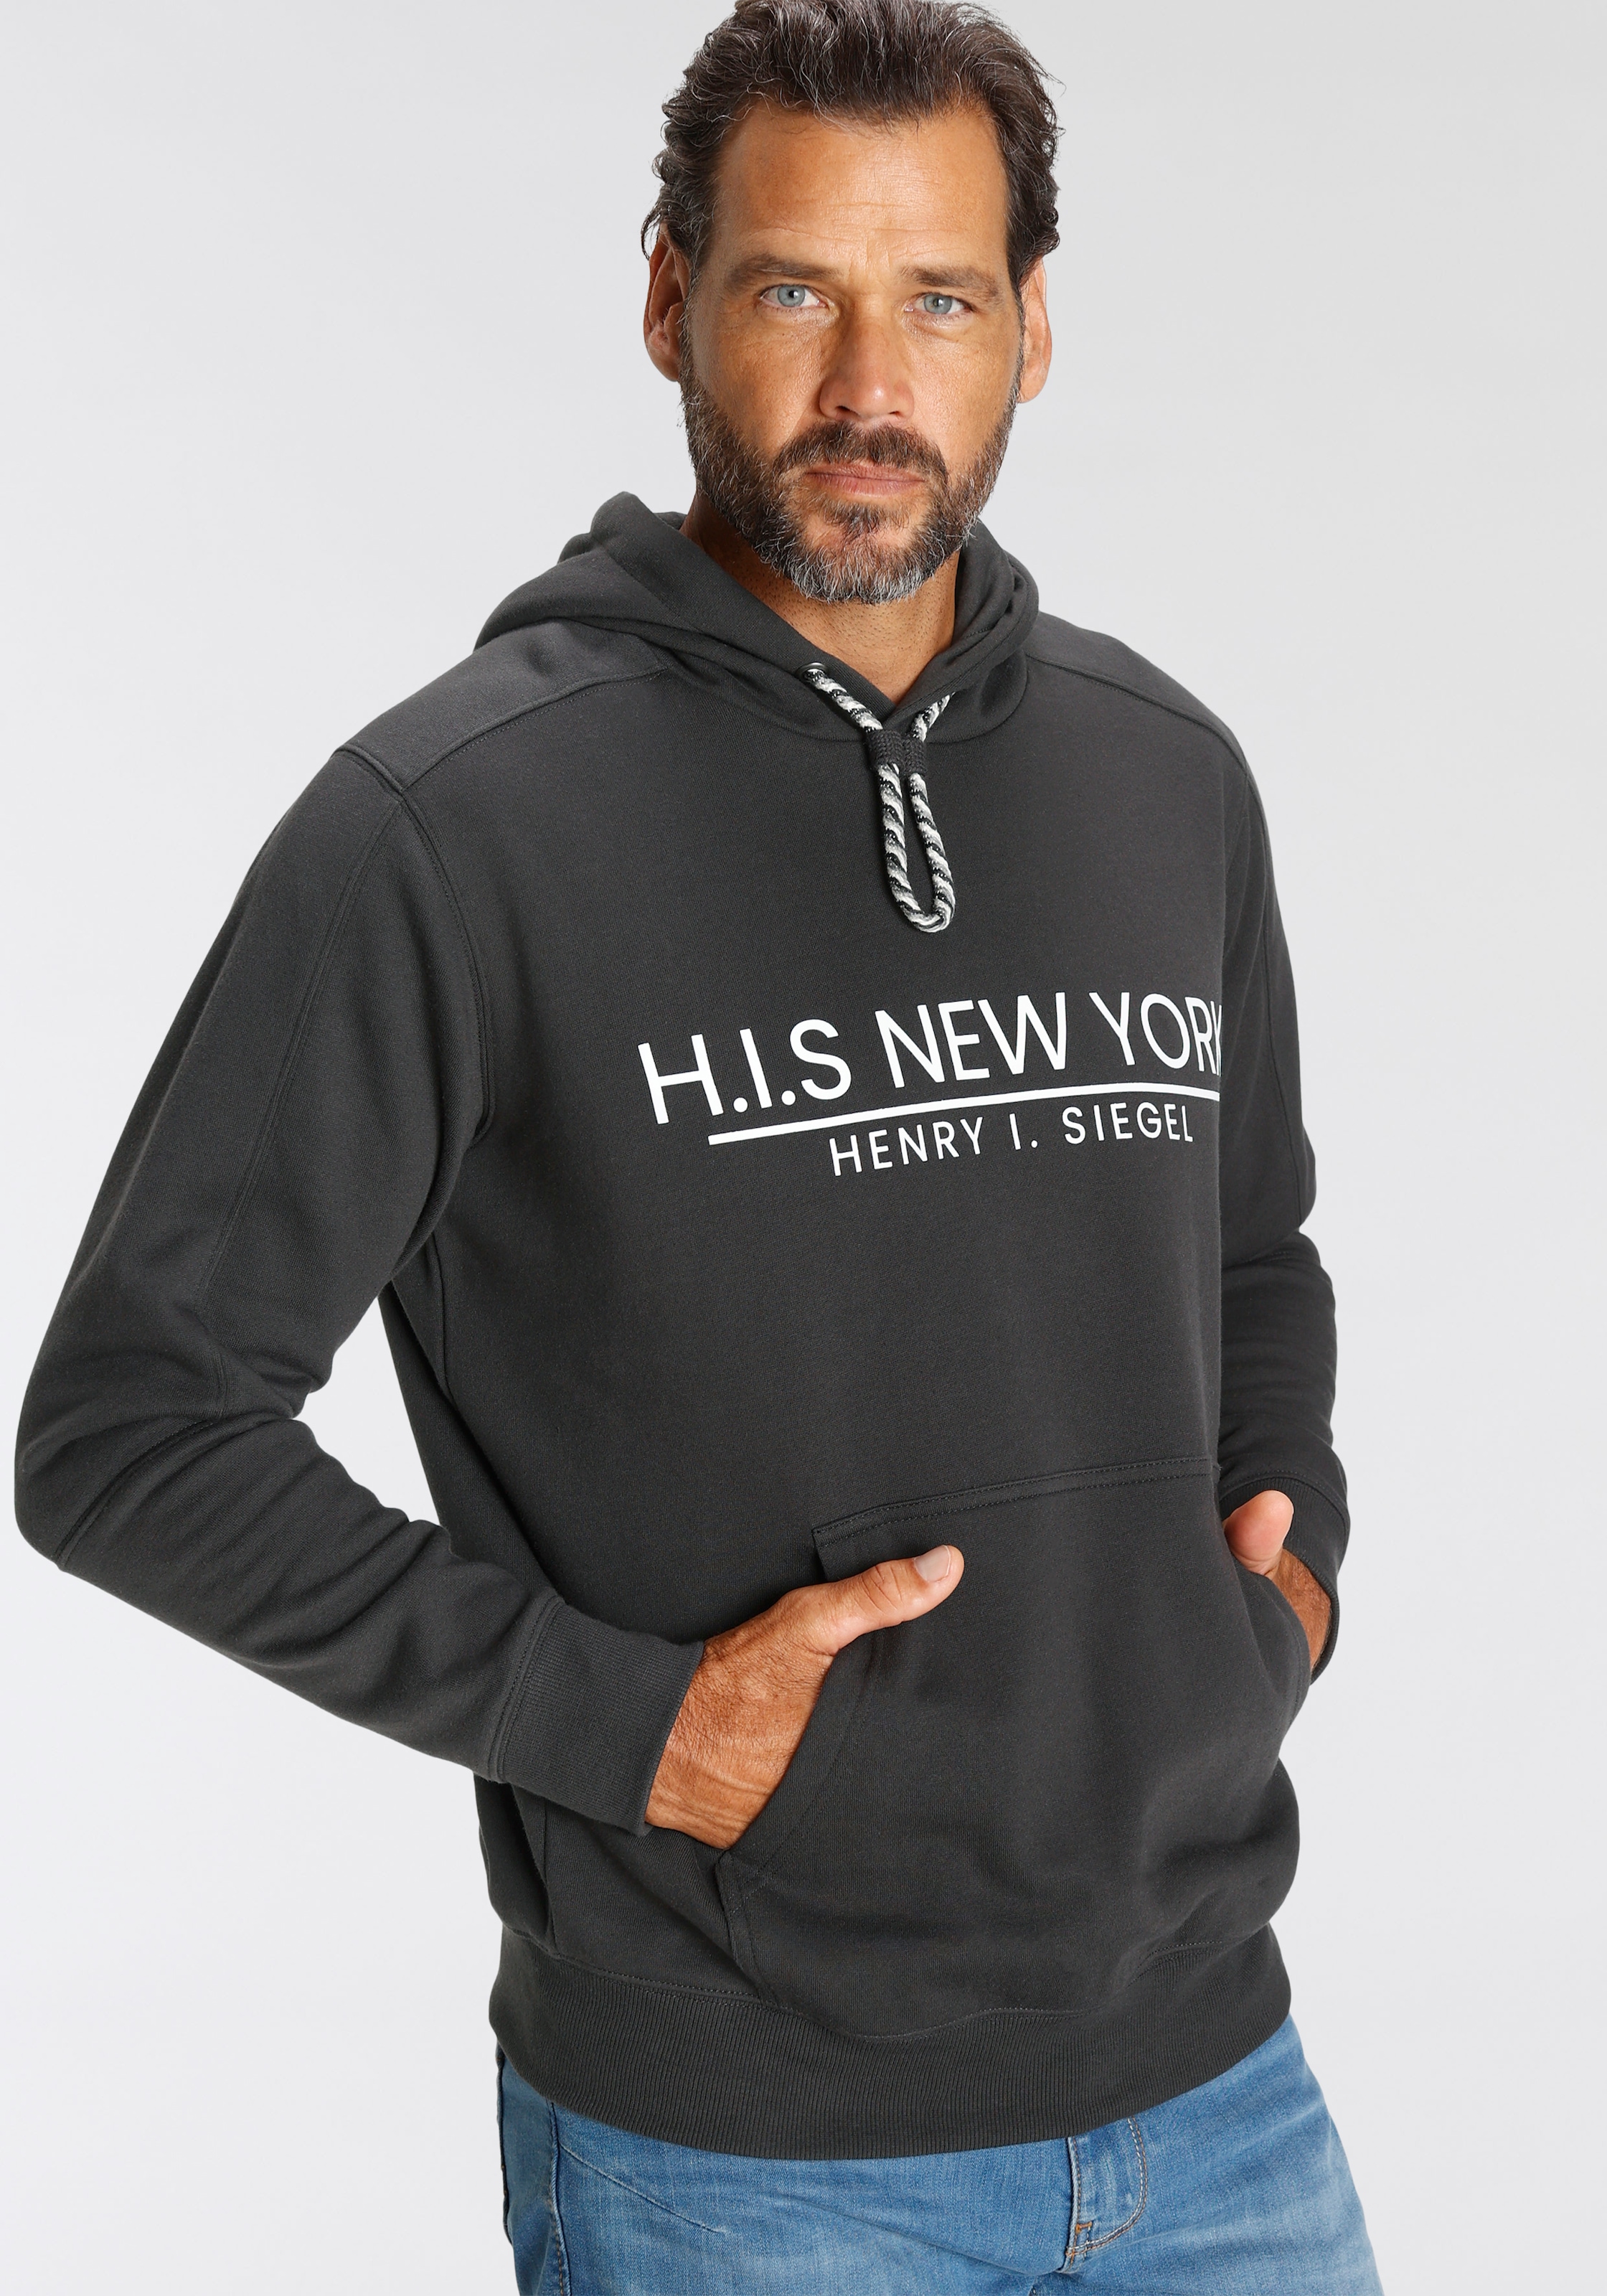 H.I.S Sweatshirt, mit mehrfarbiger Kordel